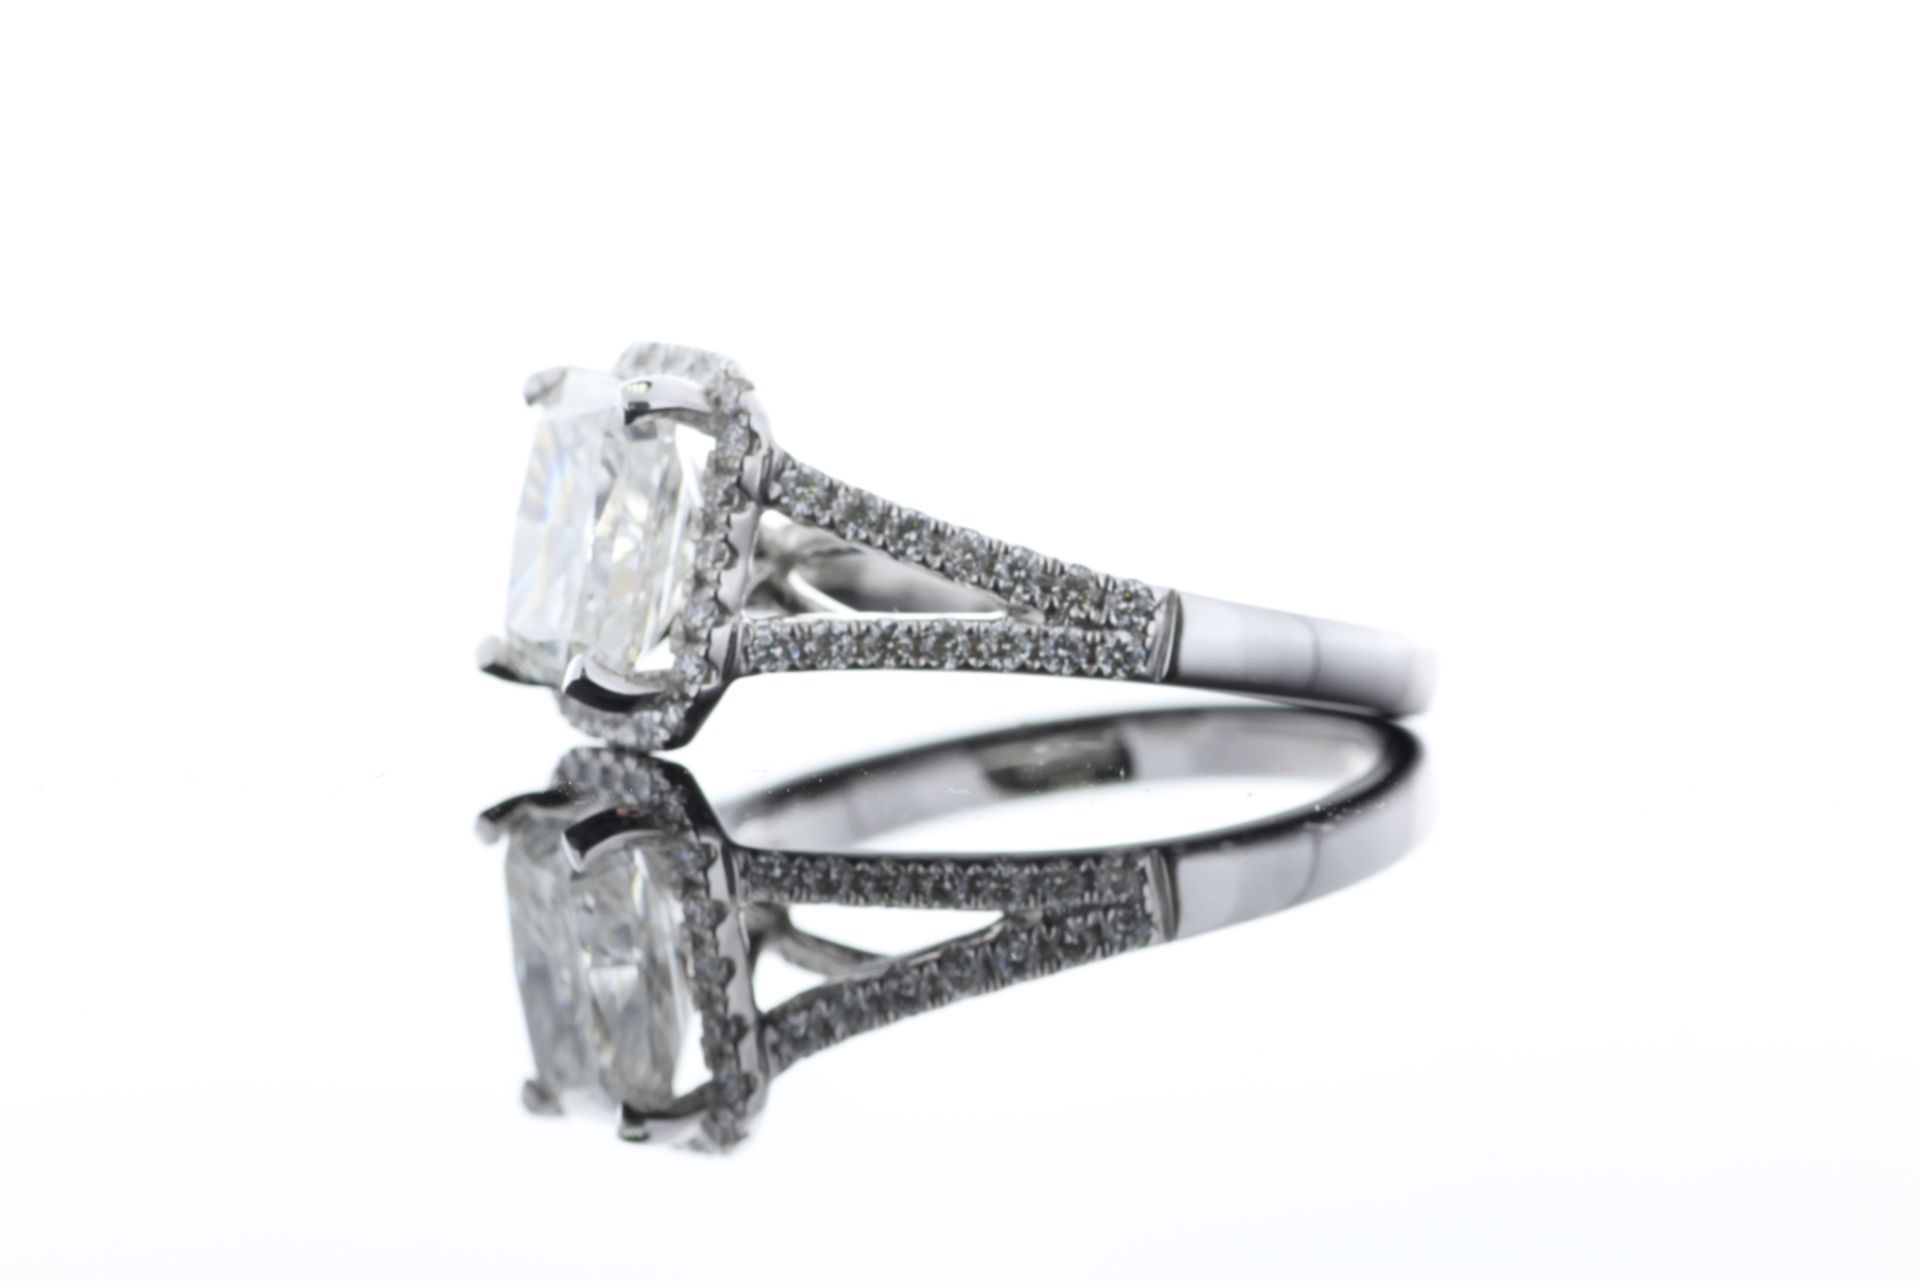 18ct White Gold Single Stone Radiant Cut Diamond With Halo Setting Ring 2.51 (2.01) - Image 15 of 73